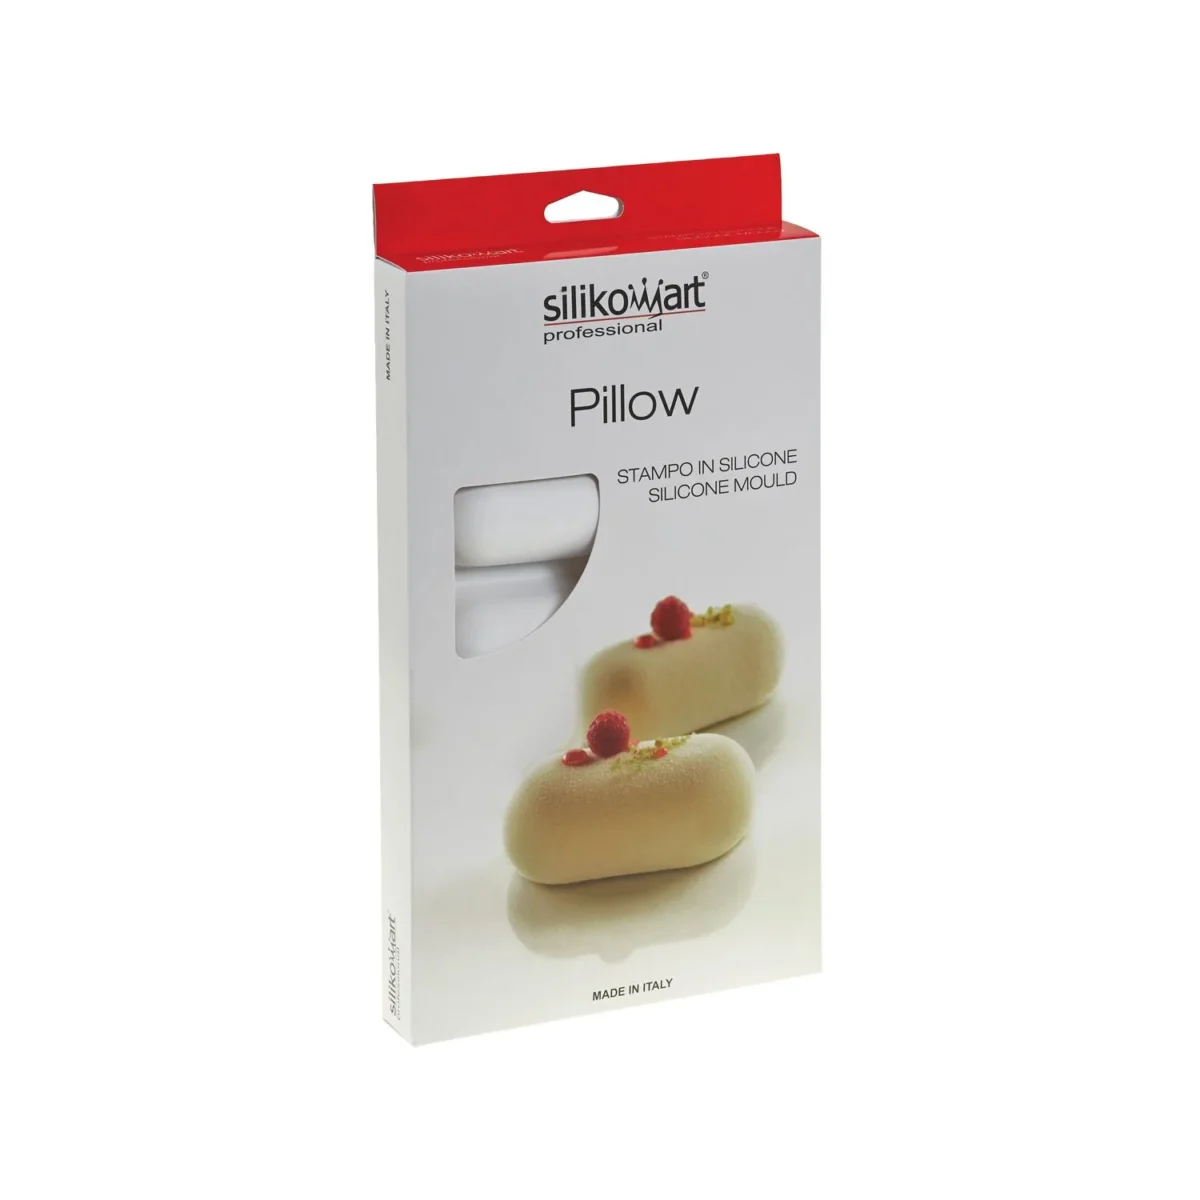 Silikomart Pillow 80